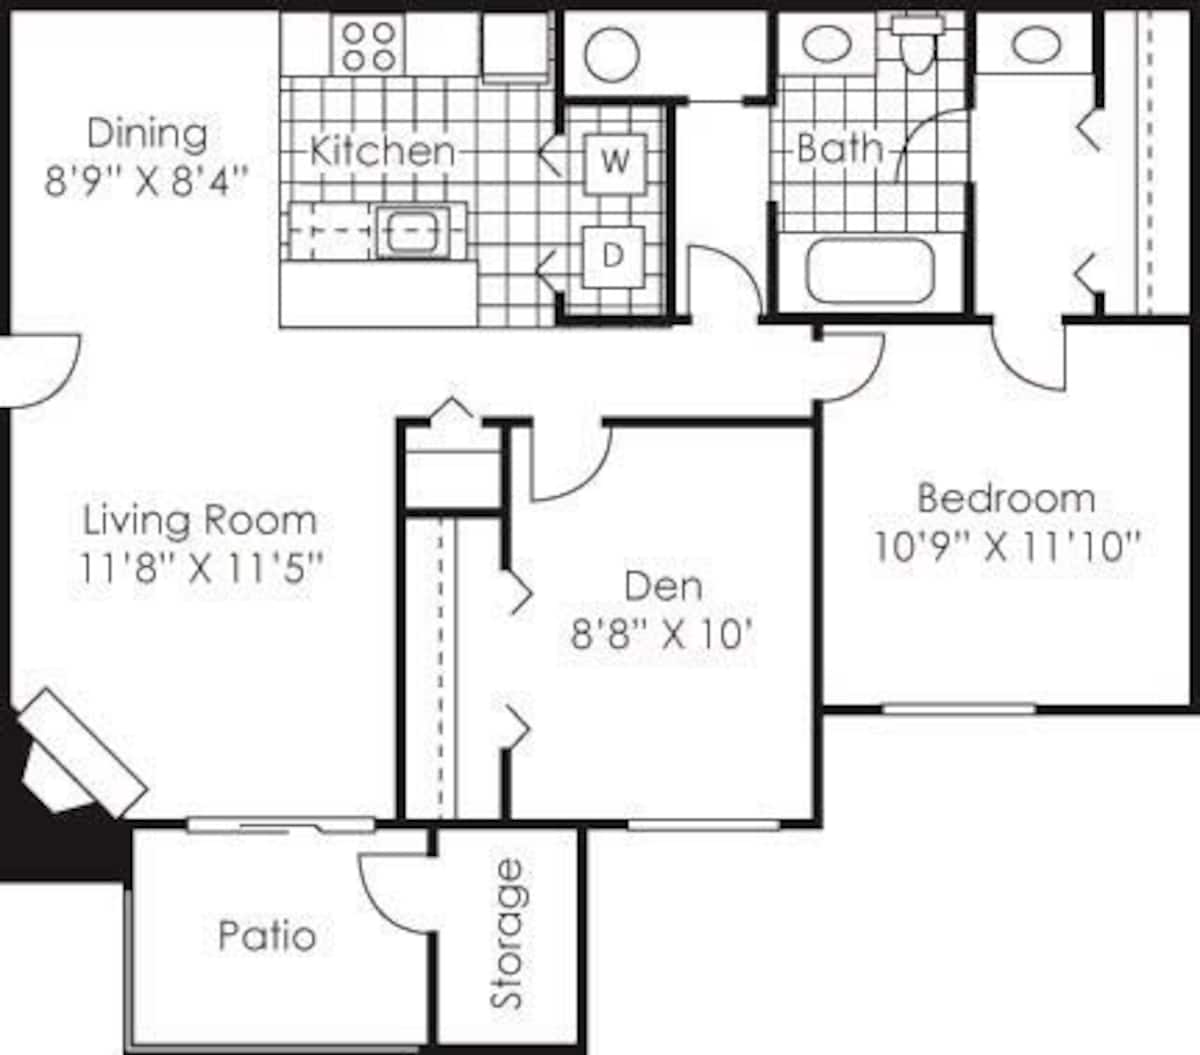 Floorplan diagram for The Devonshire, showing 1 bedroom